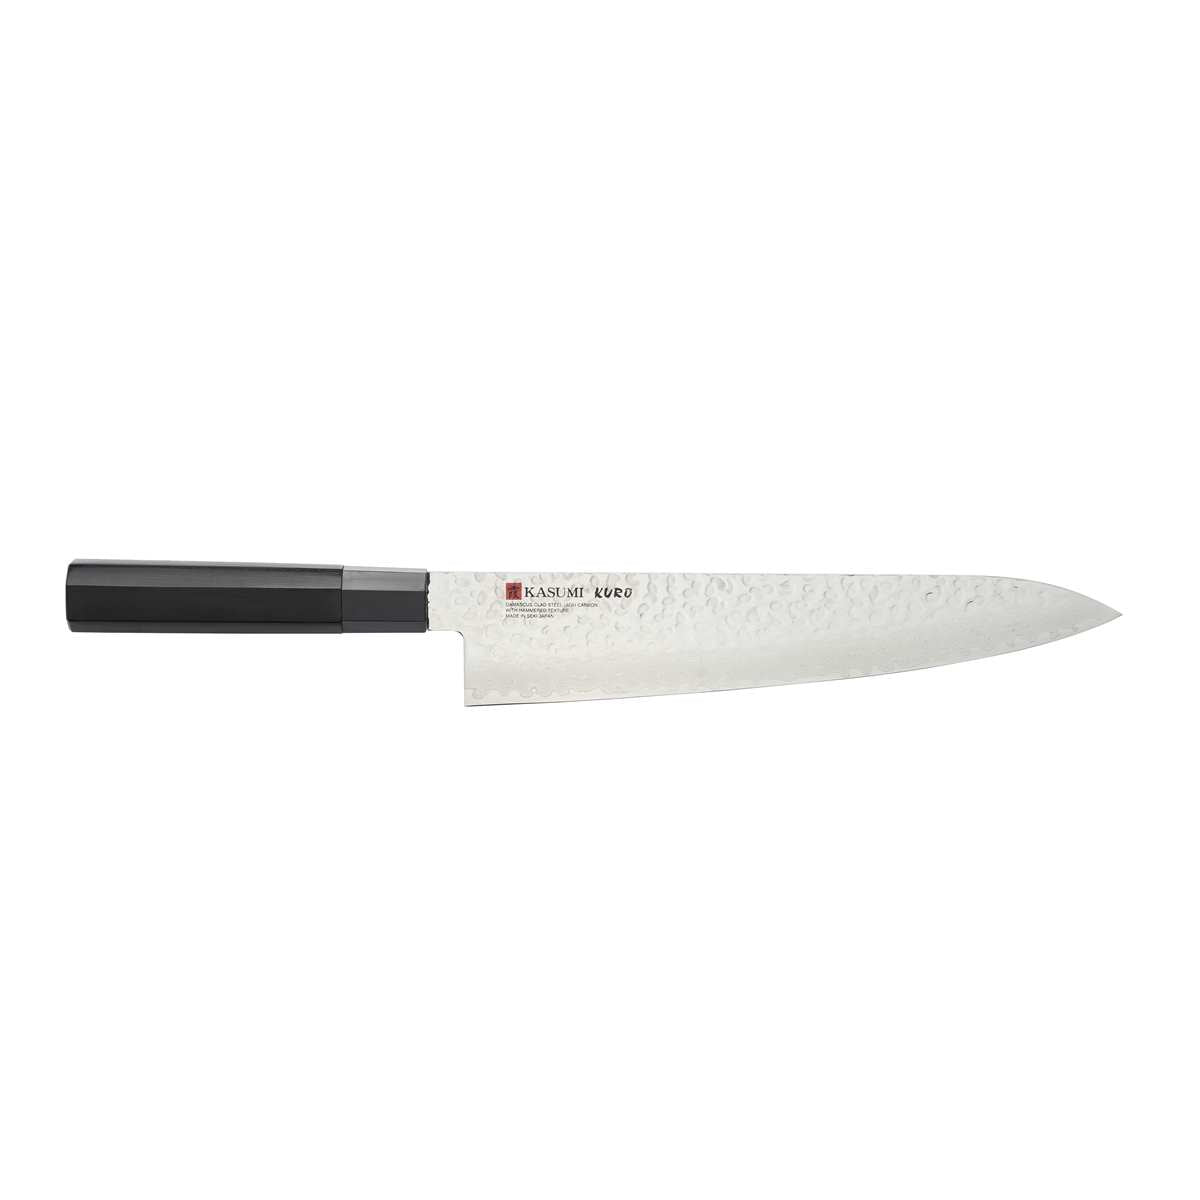 Shibui Gyutou Knife - Japanese Chef Knife - All Purpose